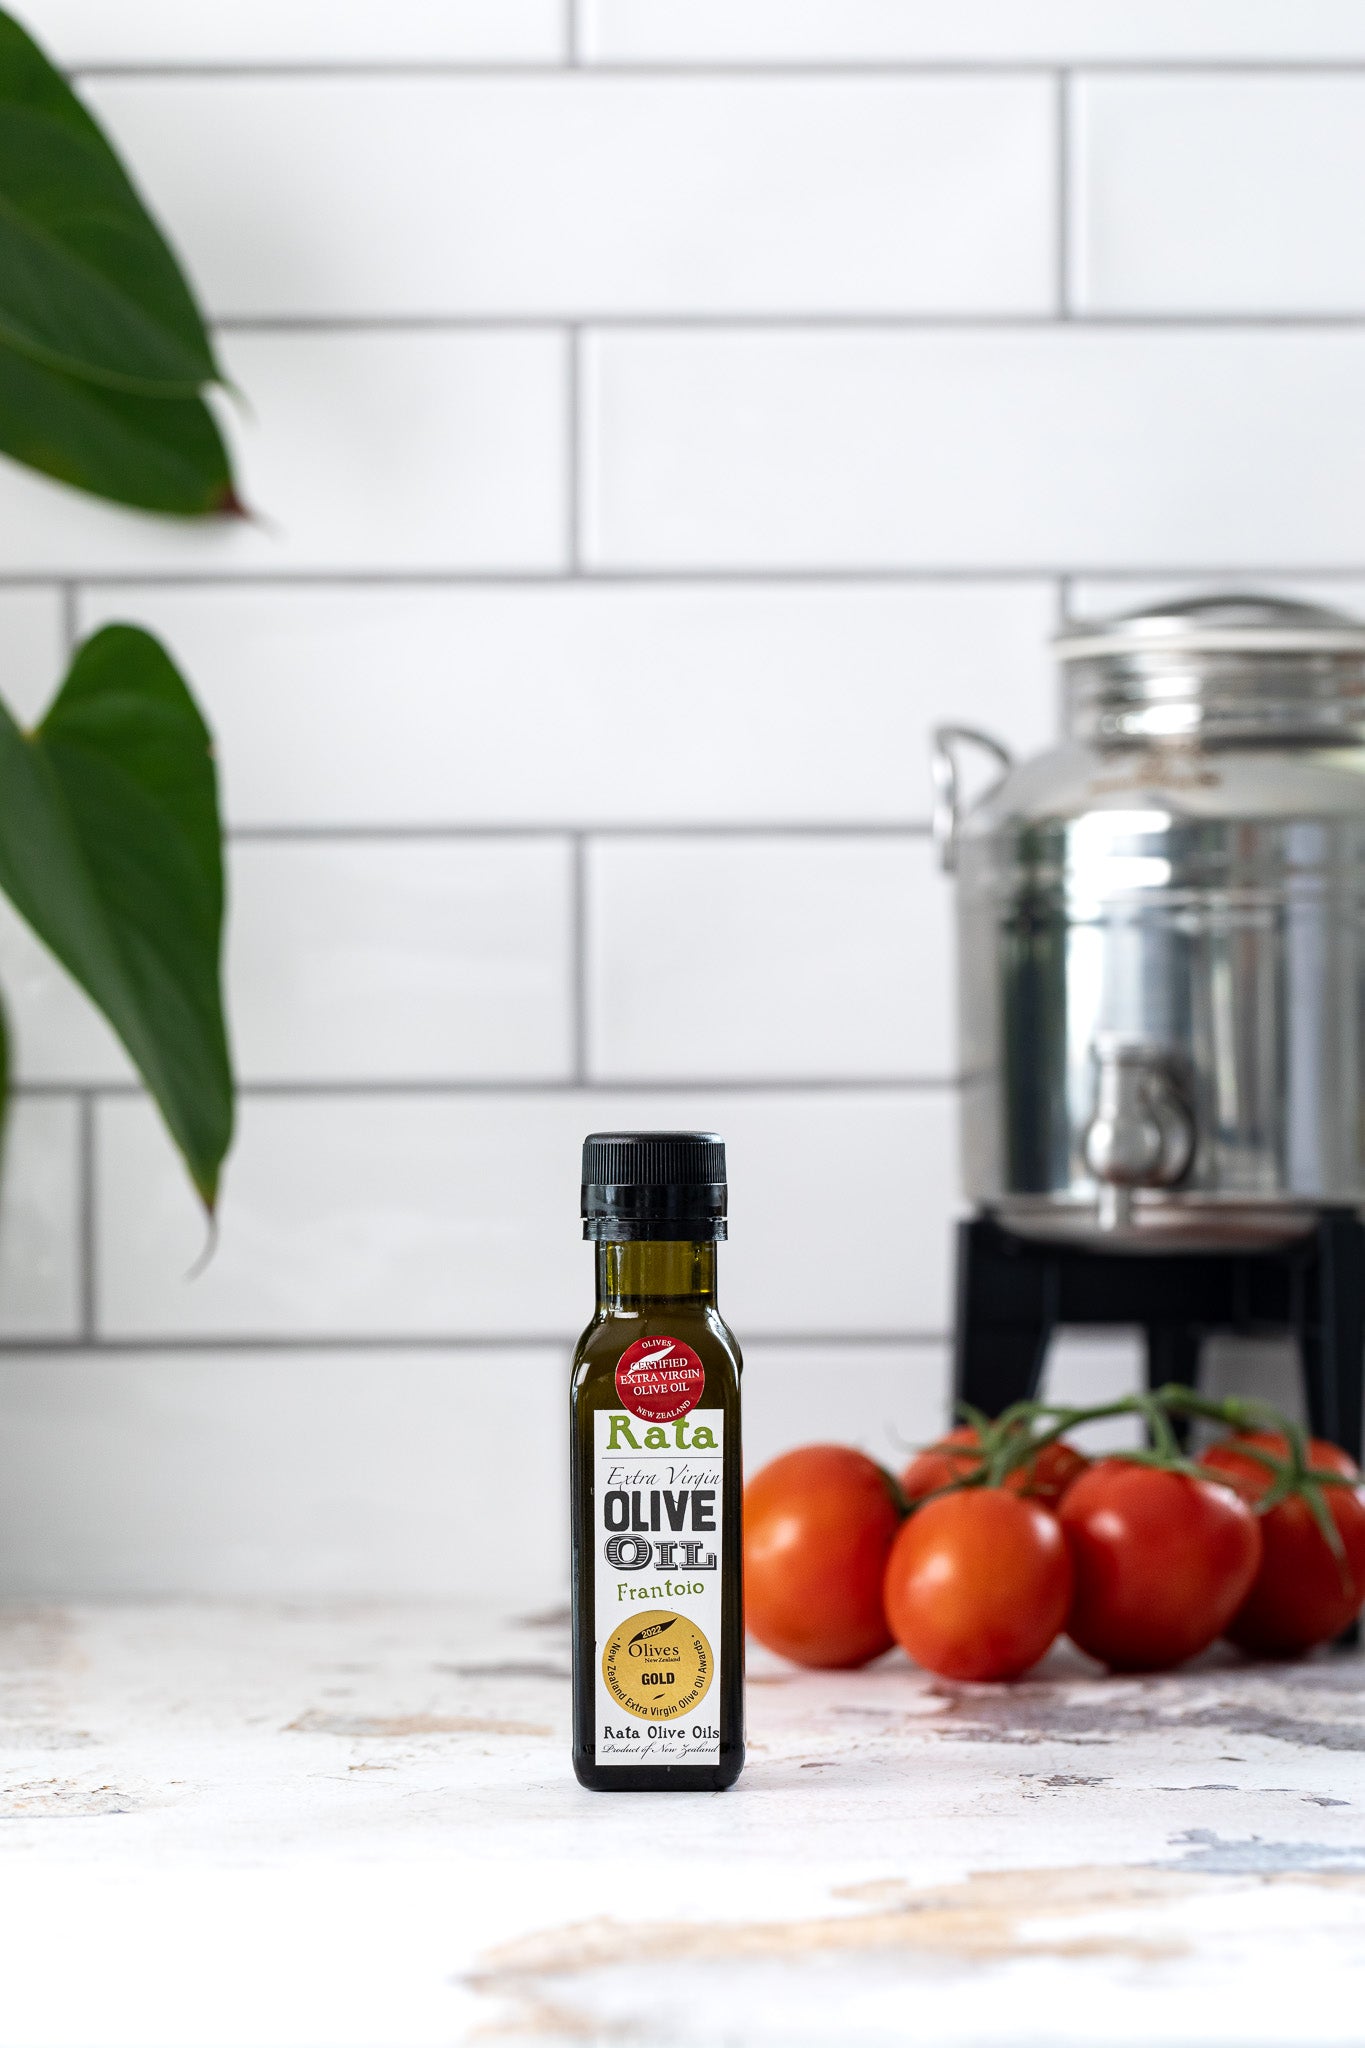 Rata Olive Oil - Frantoio